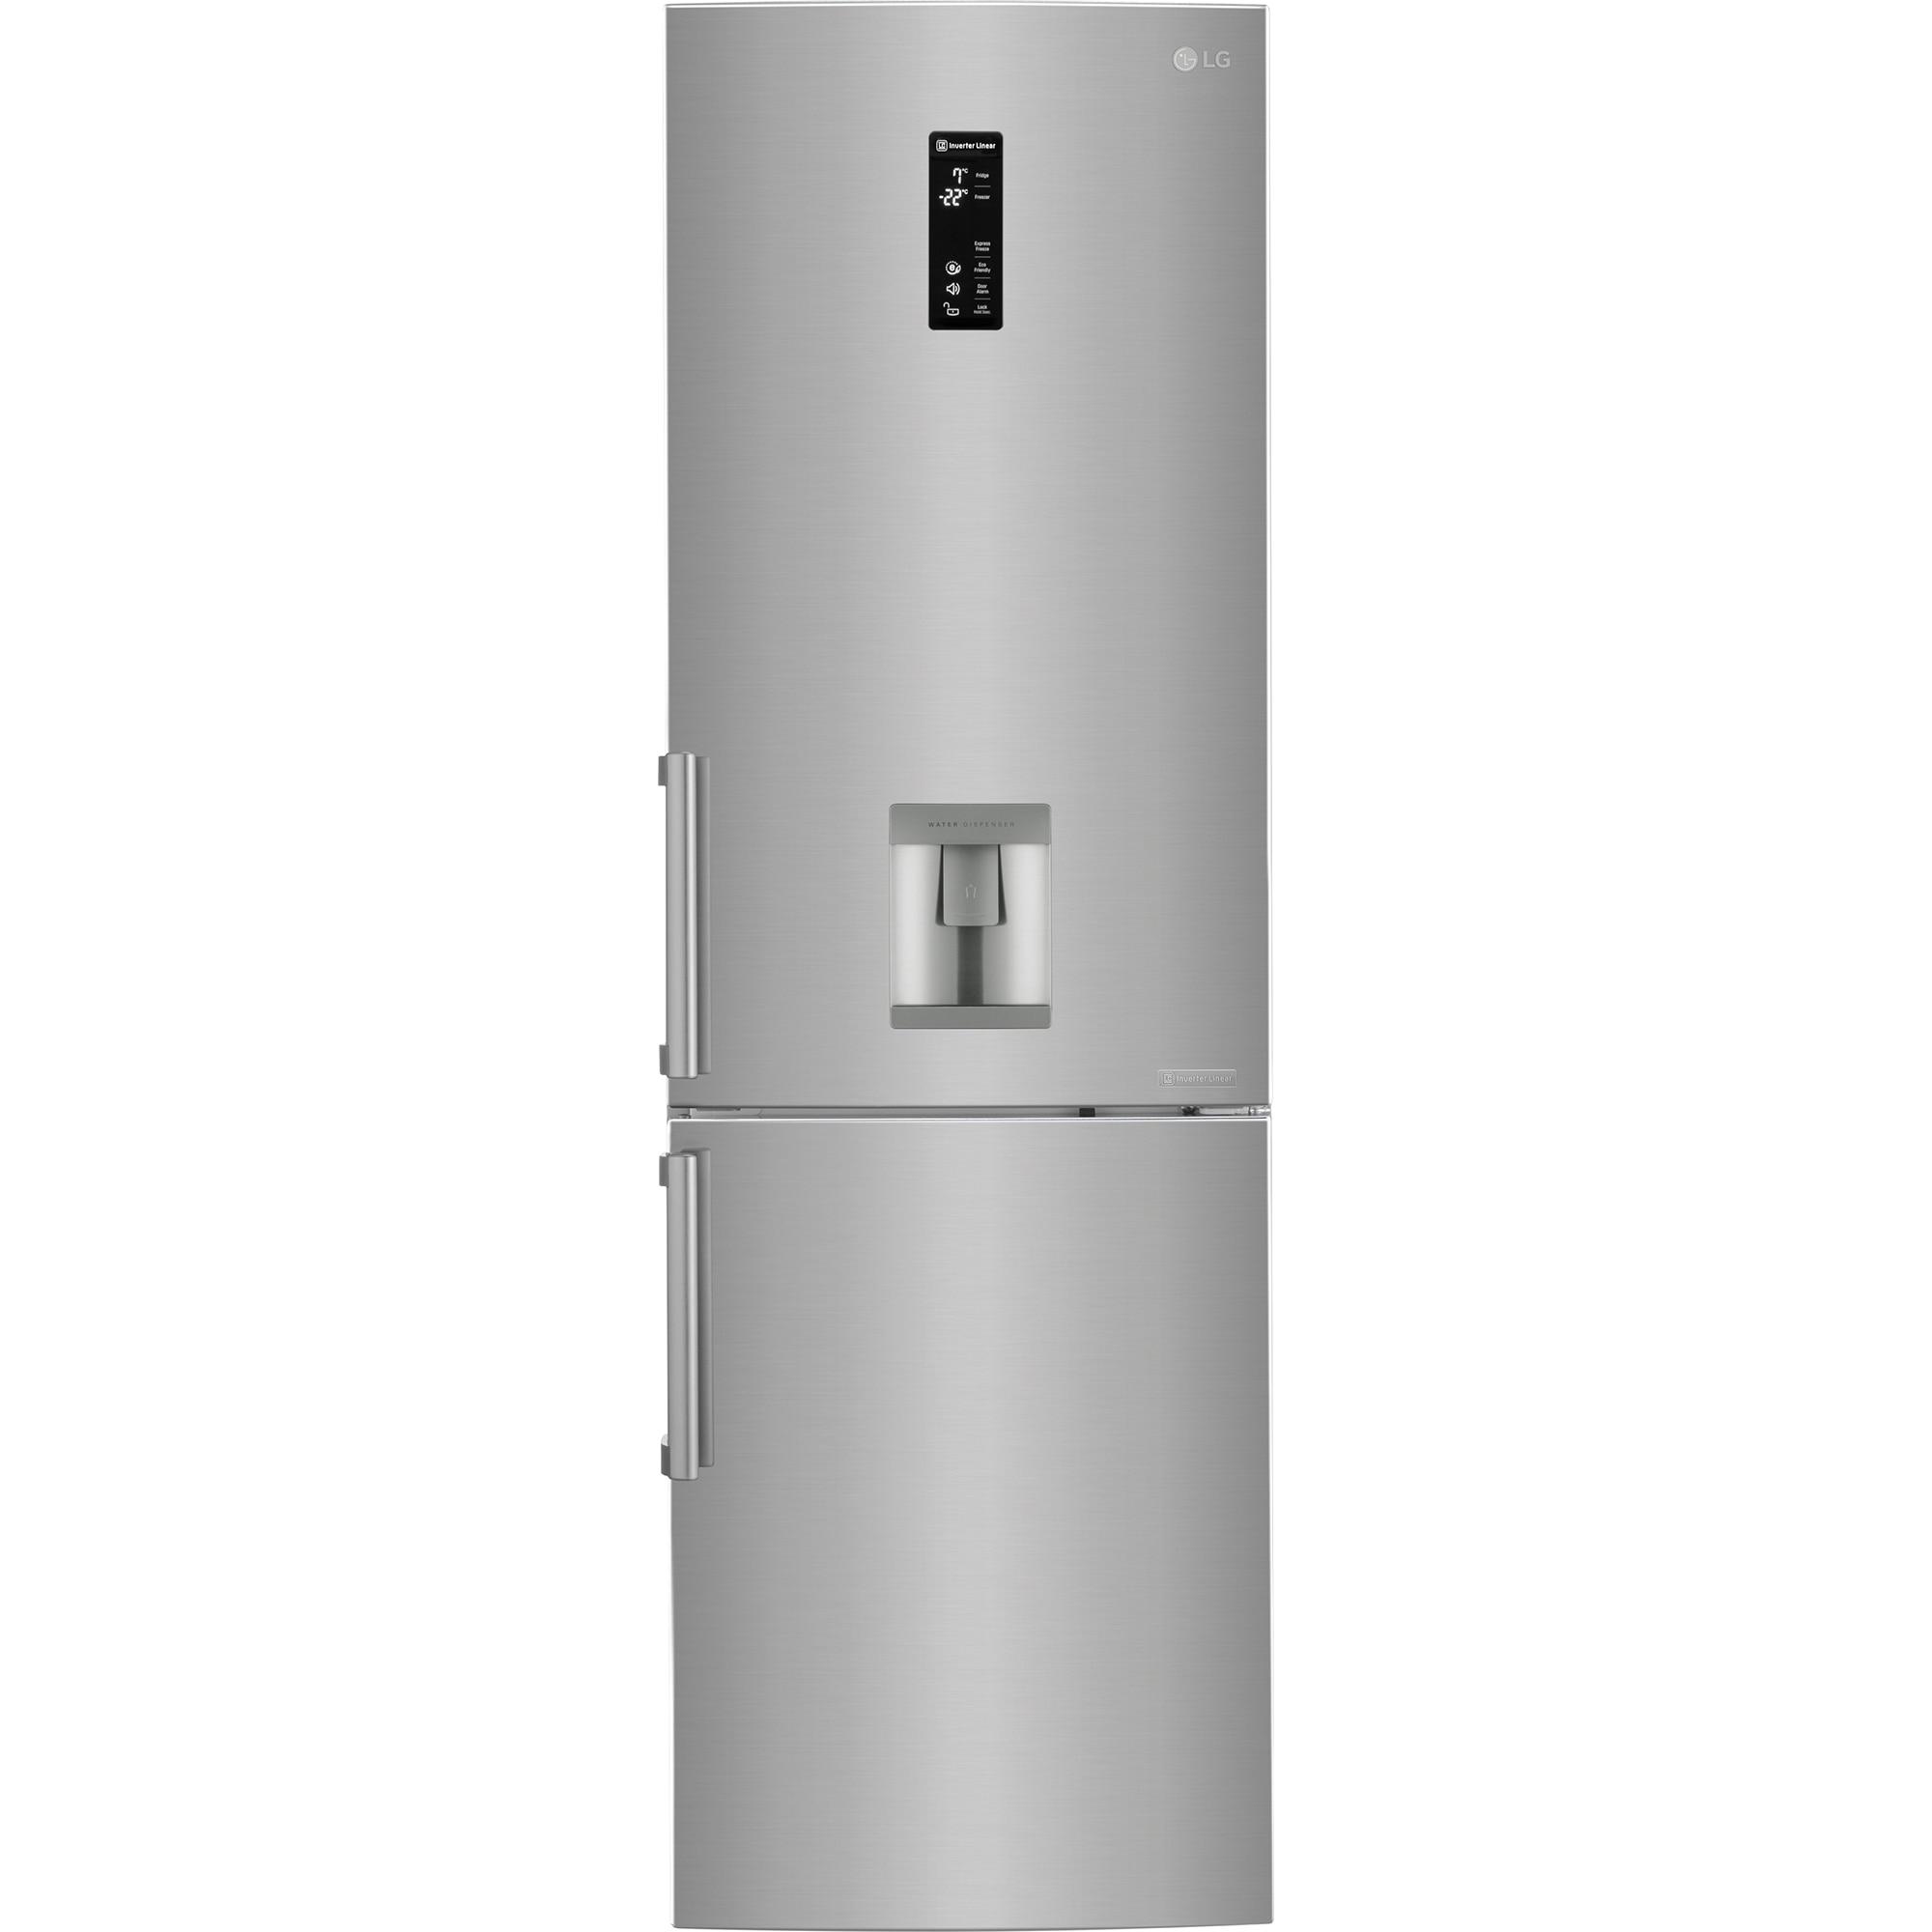 Хладилник LG GBF60NSFZB с обем от 339 л.